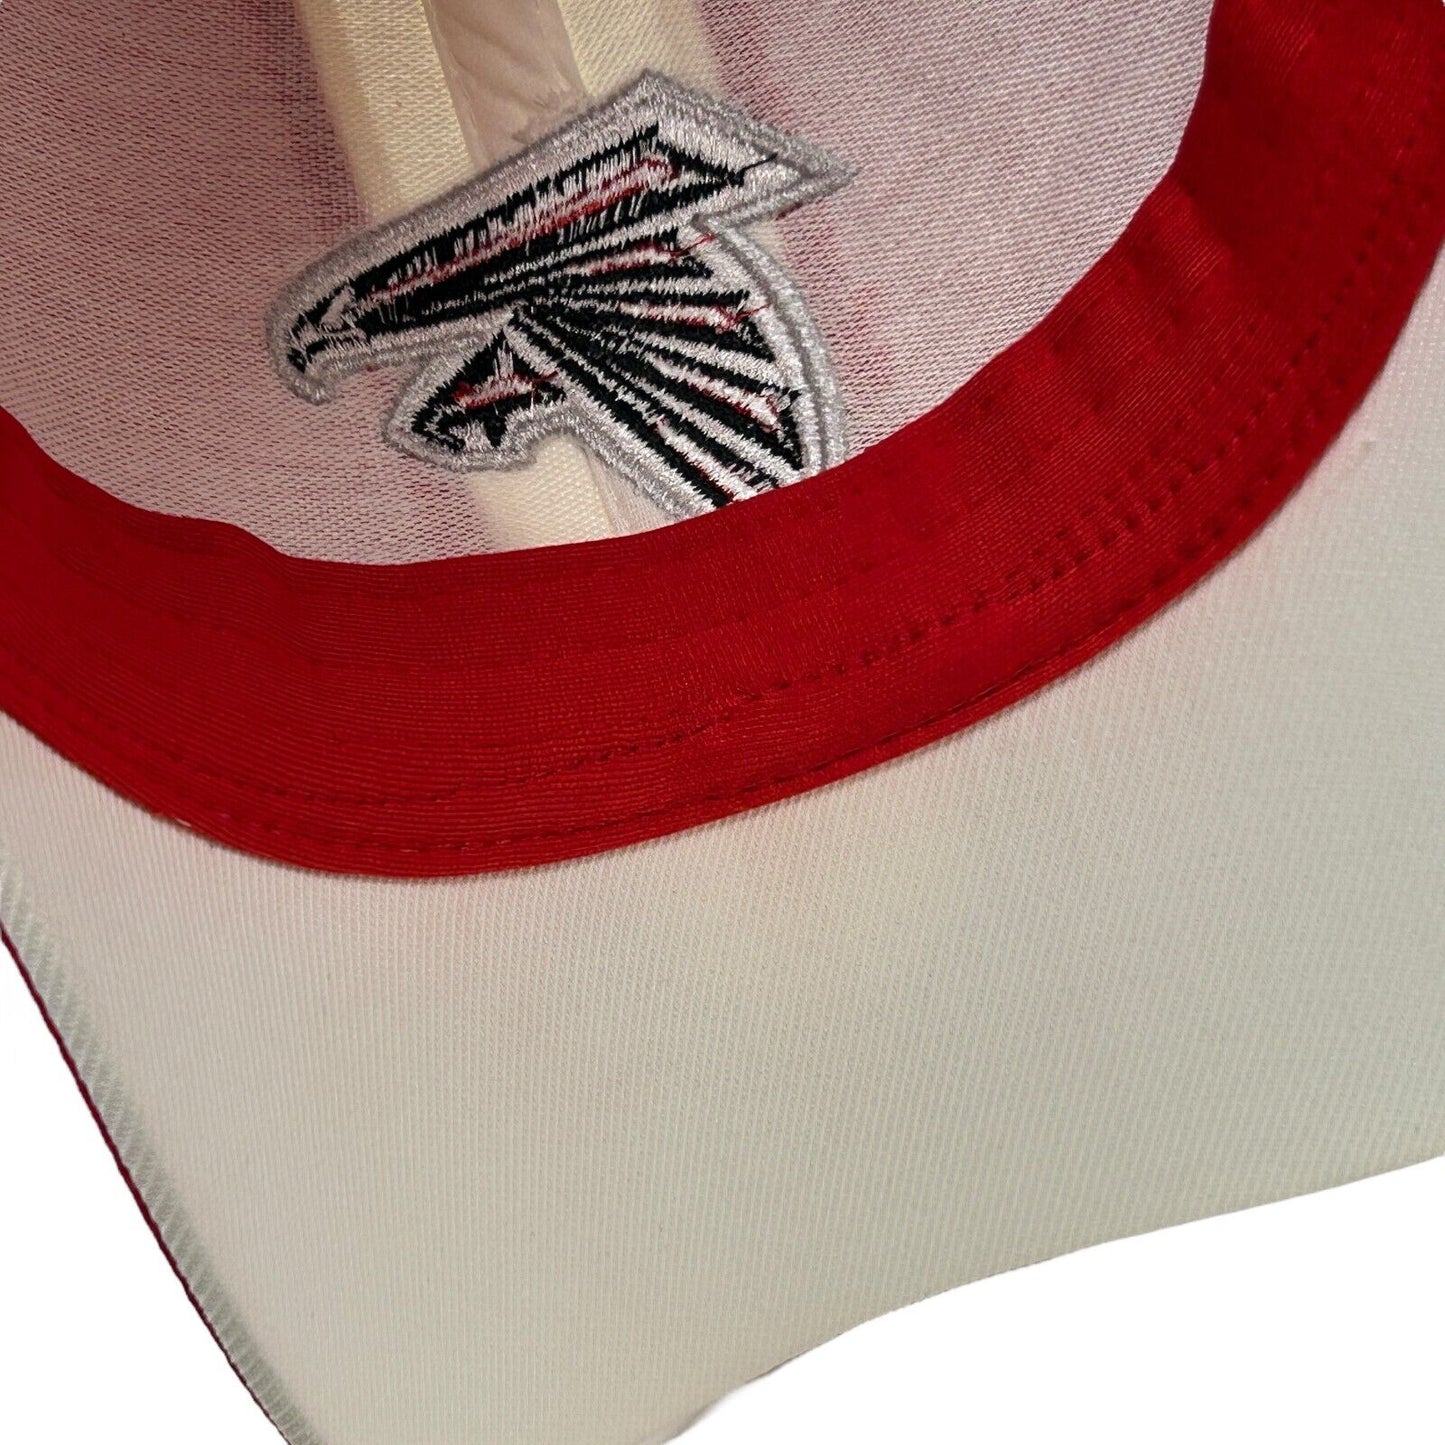 Atlanta Falcons Hat Red Reebok Authentic Sideline Baseball Cap Flex Fitted OSFA